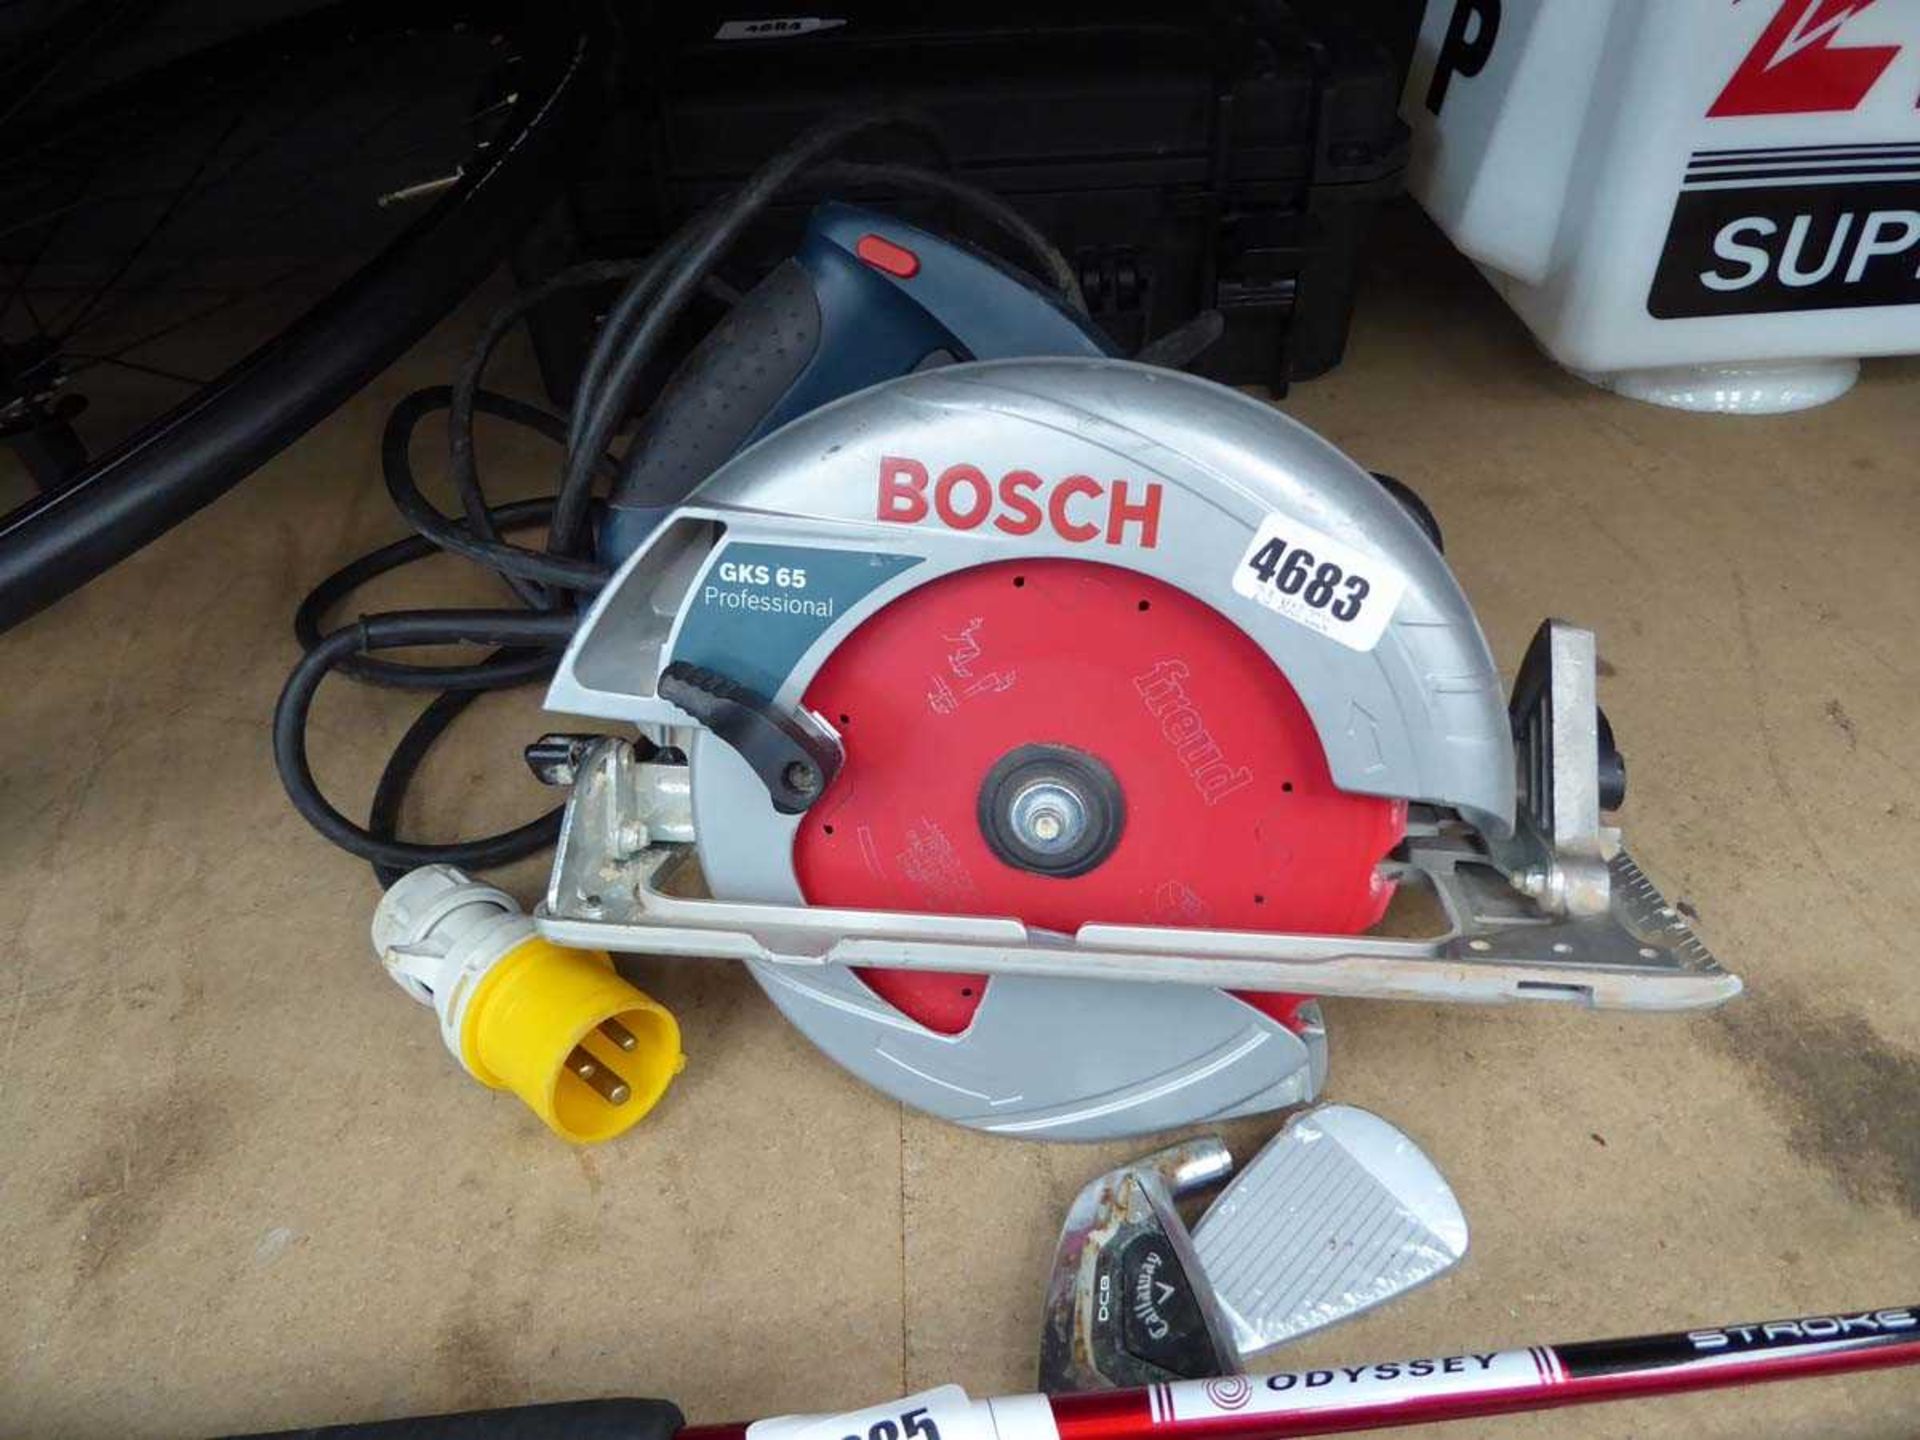 Bosch 110v skill saw